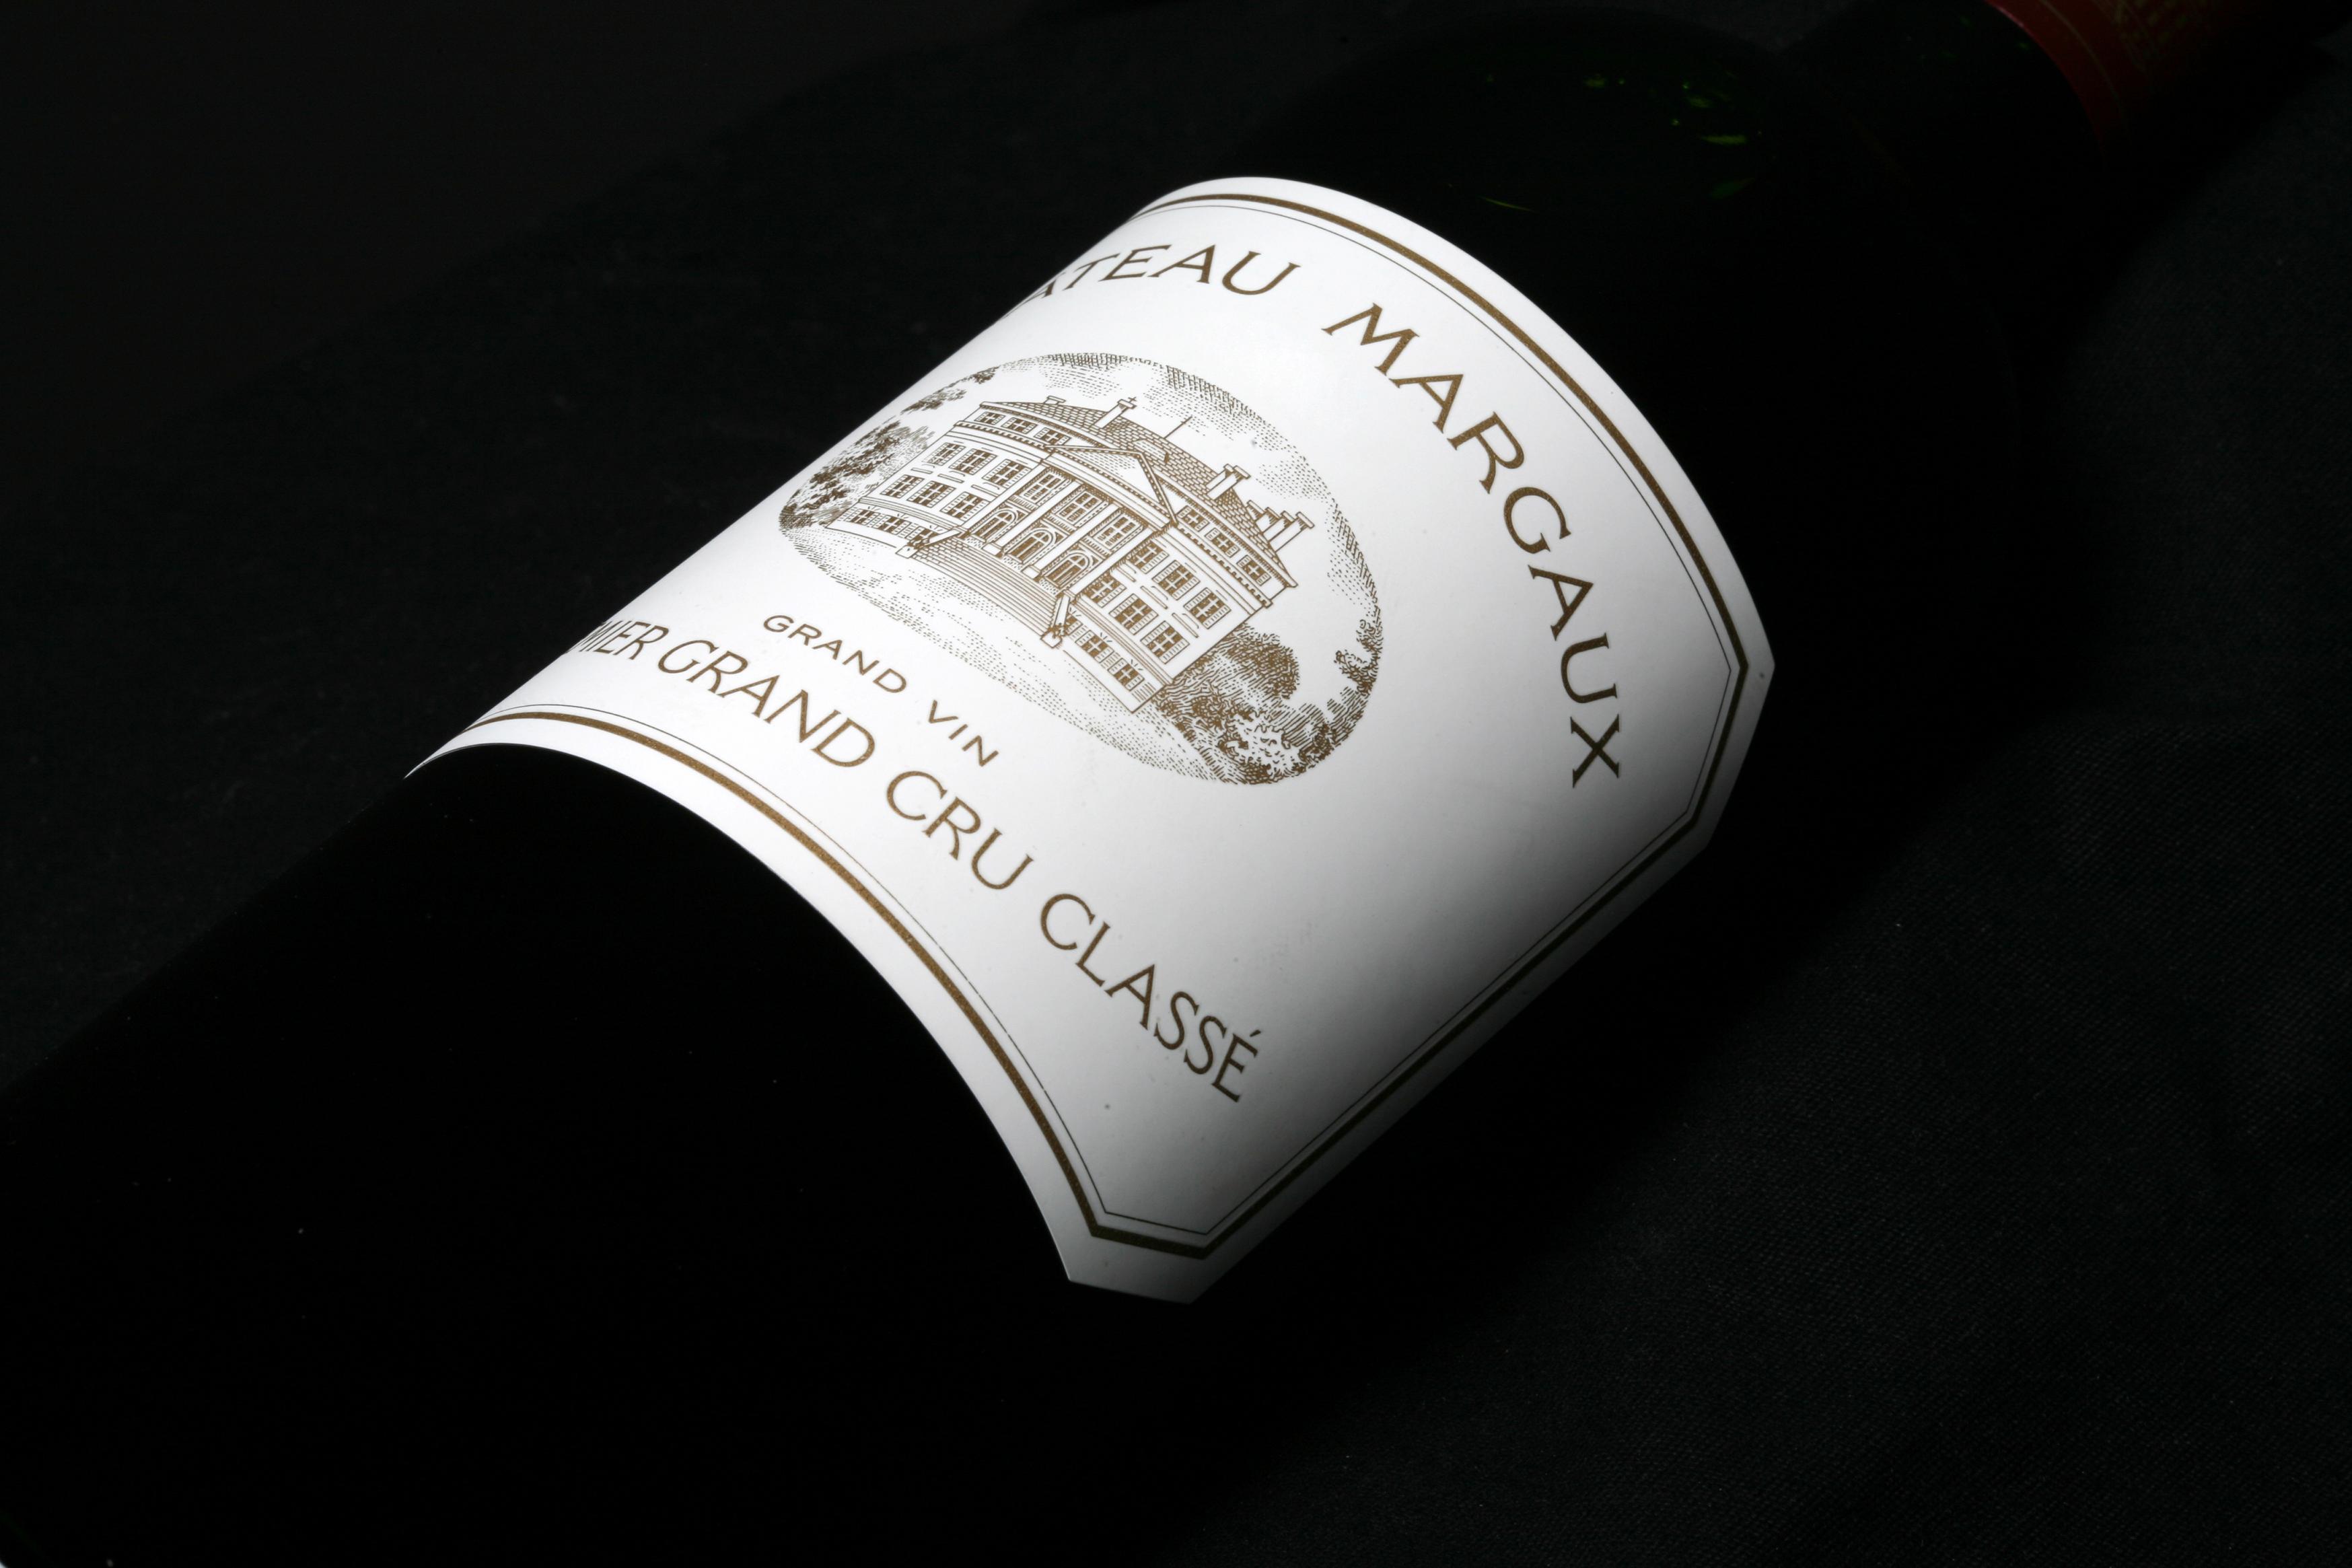 Chateau Margaux vino